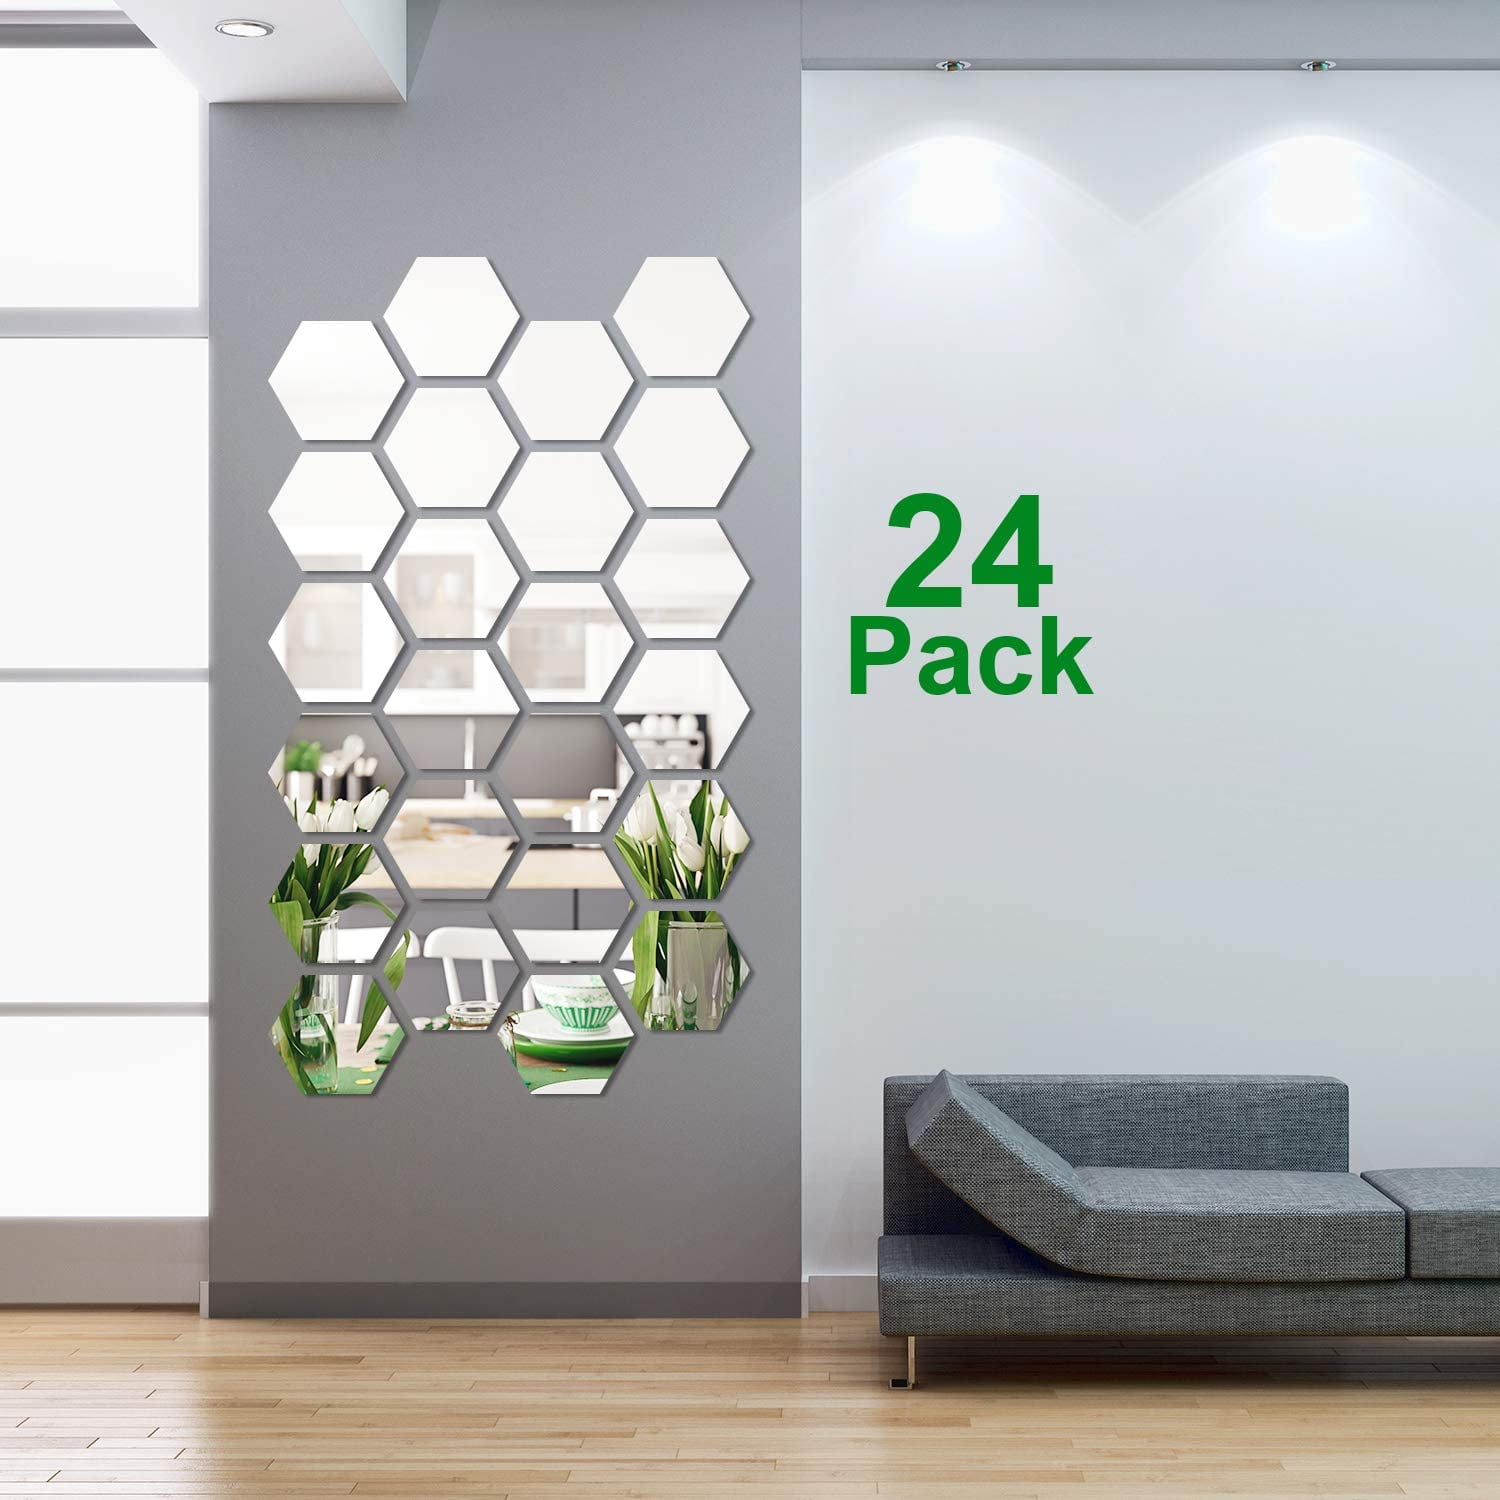 3D Acrylic Hexagon Wall Sticker Removable Mirror Home Decor Art DIY Stickers